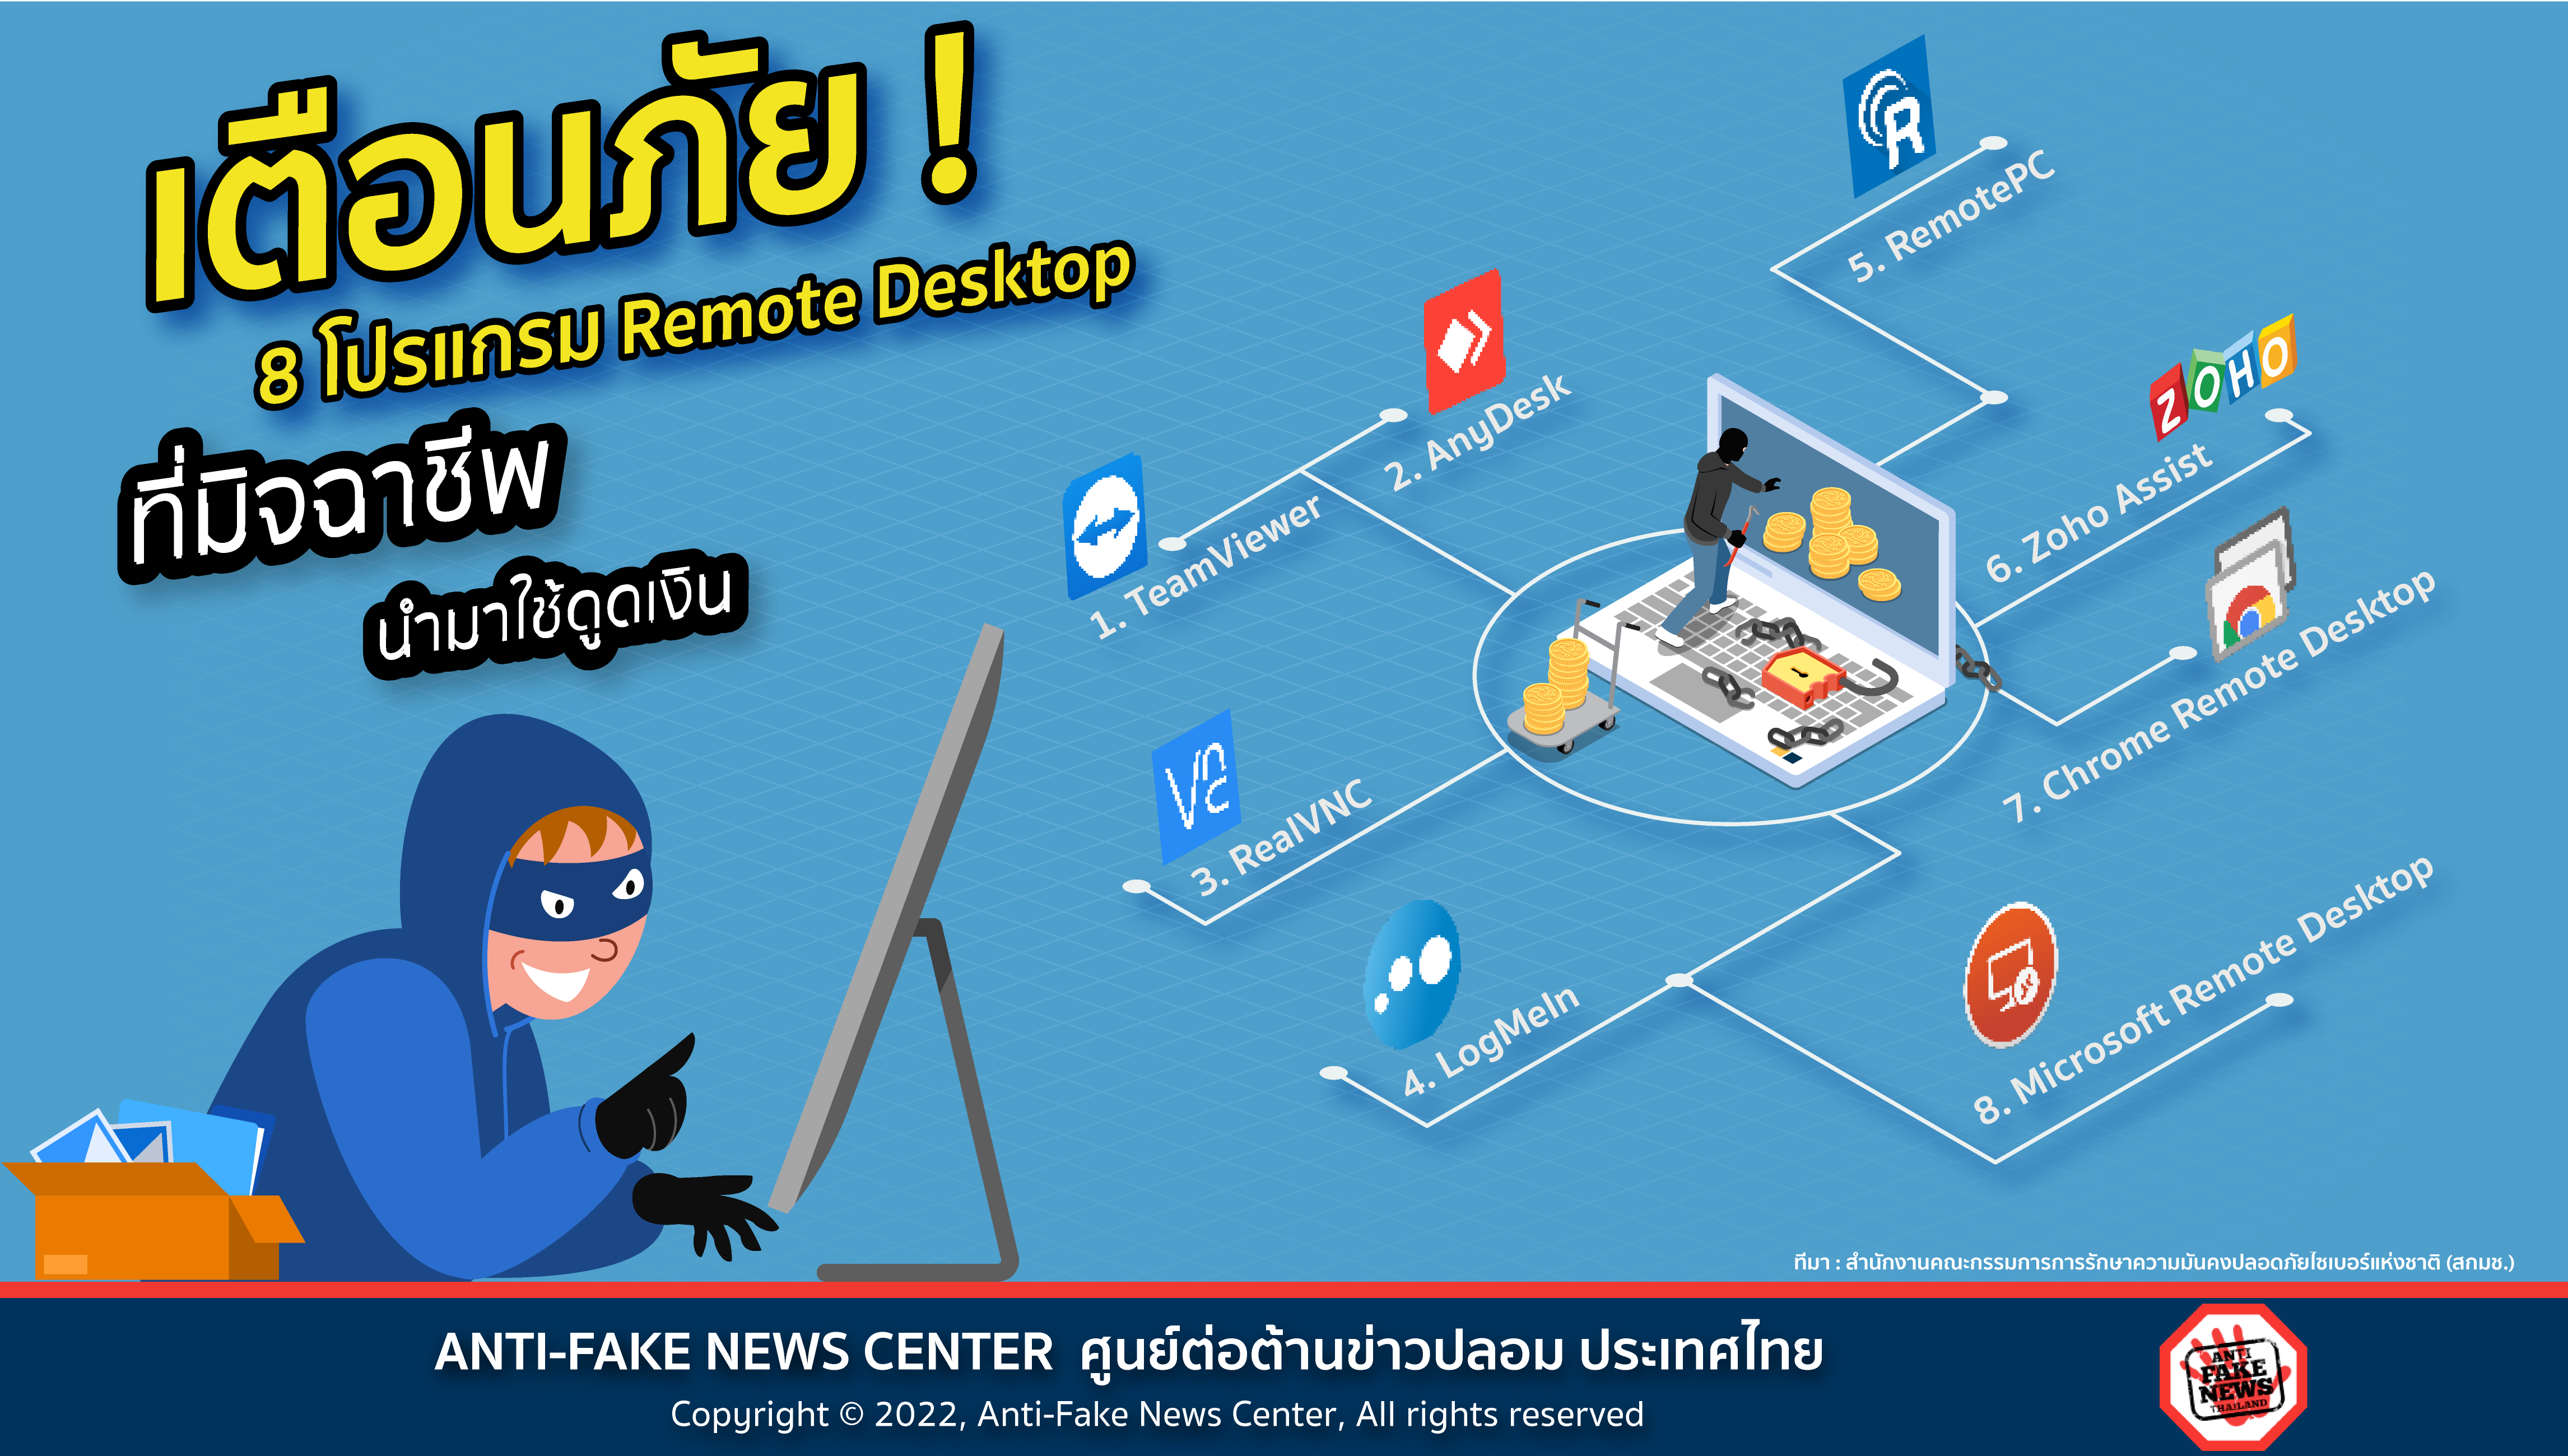 4 May 22 8 โปรแกรม Remote Desktop ที่มิจฉาชีพนำมาใช้ดูดเงิน Web 1